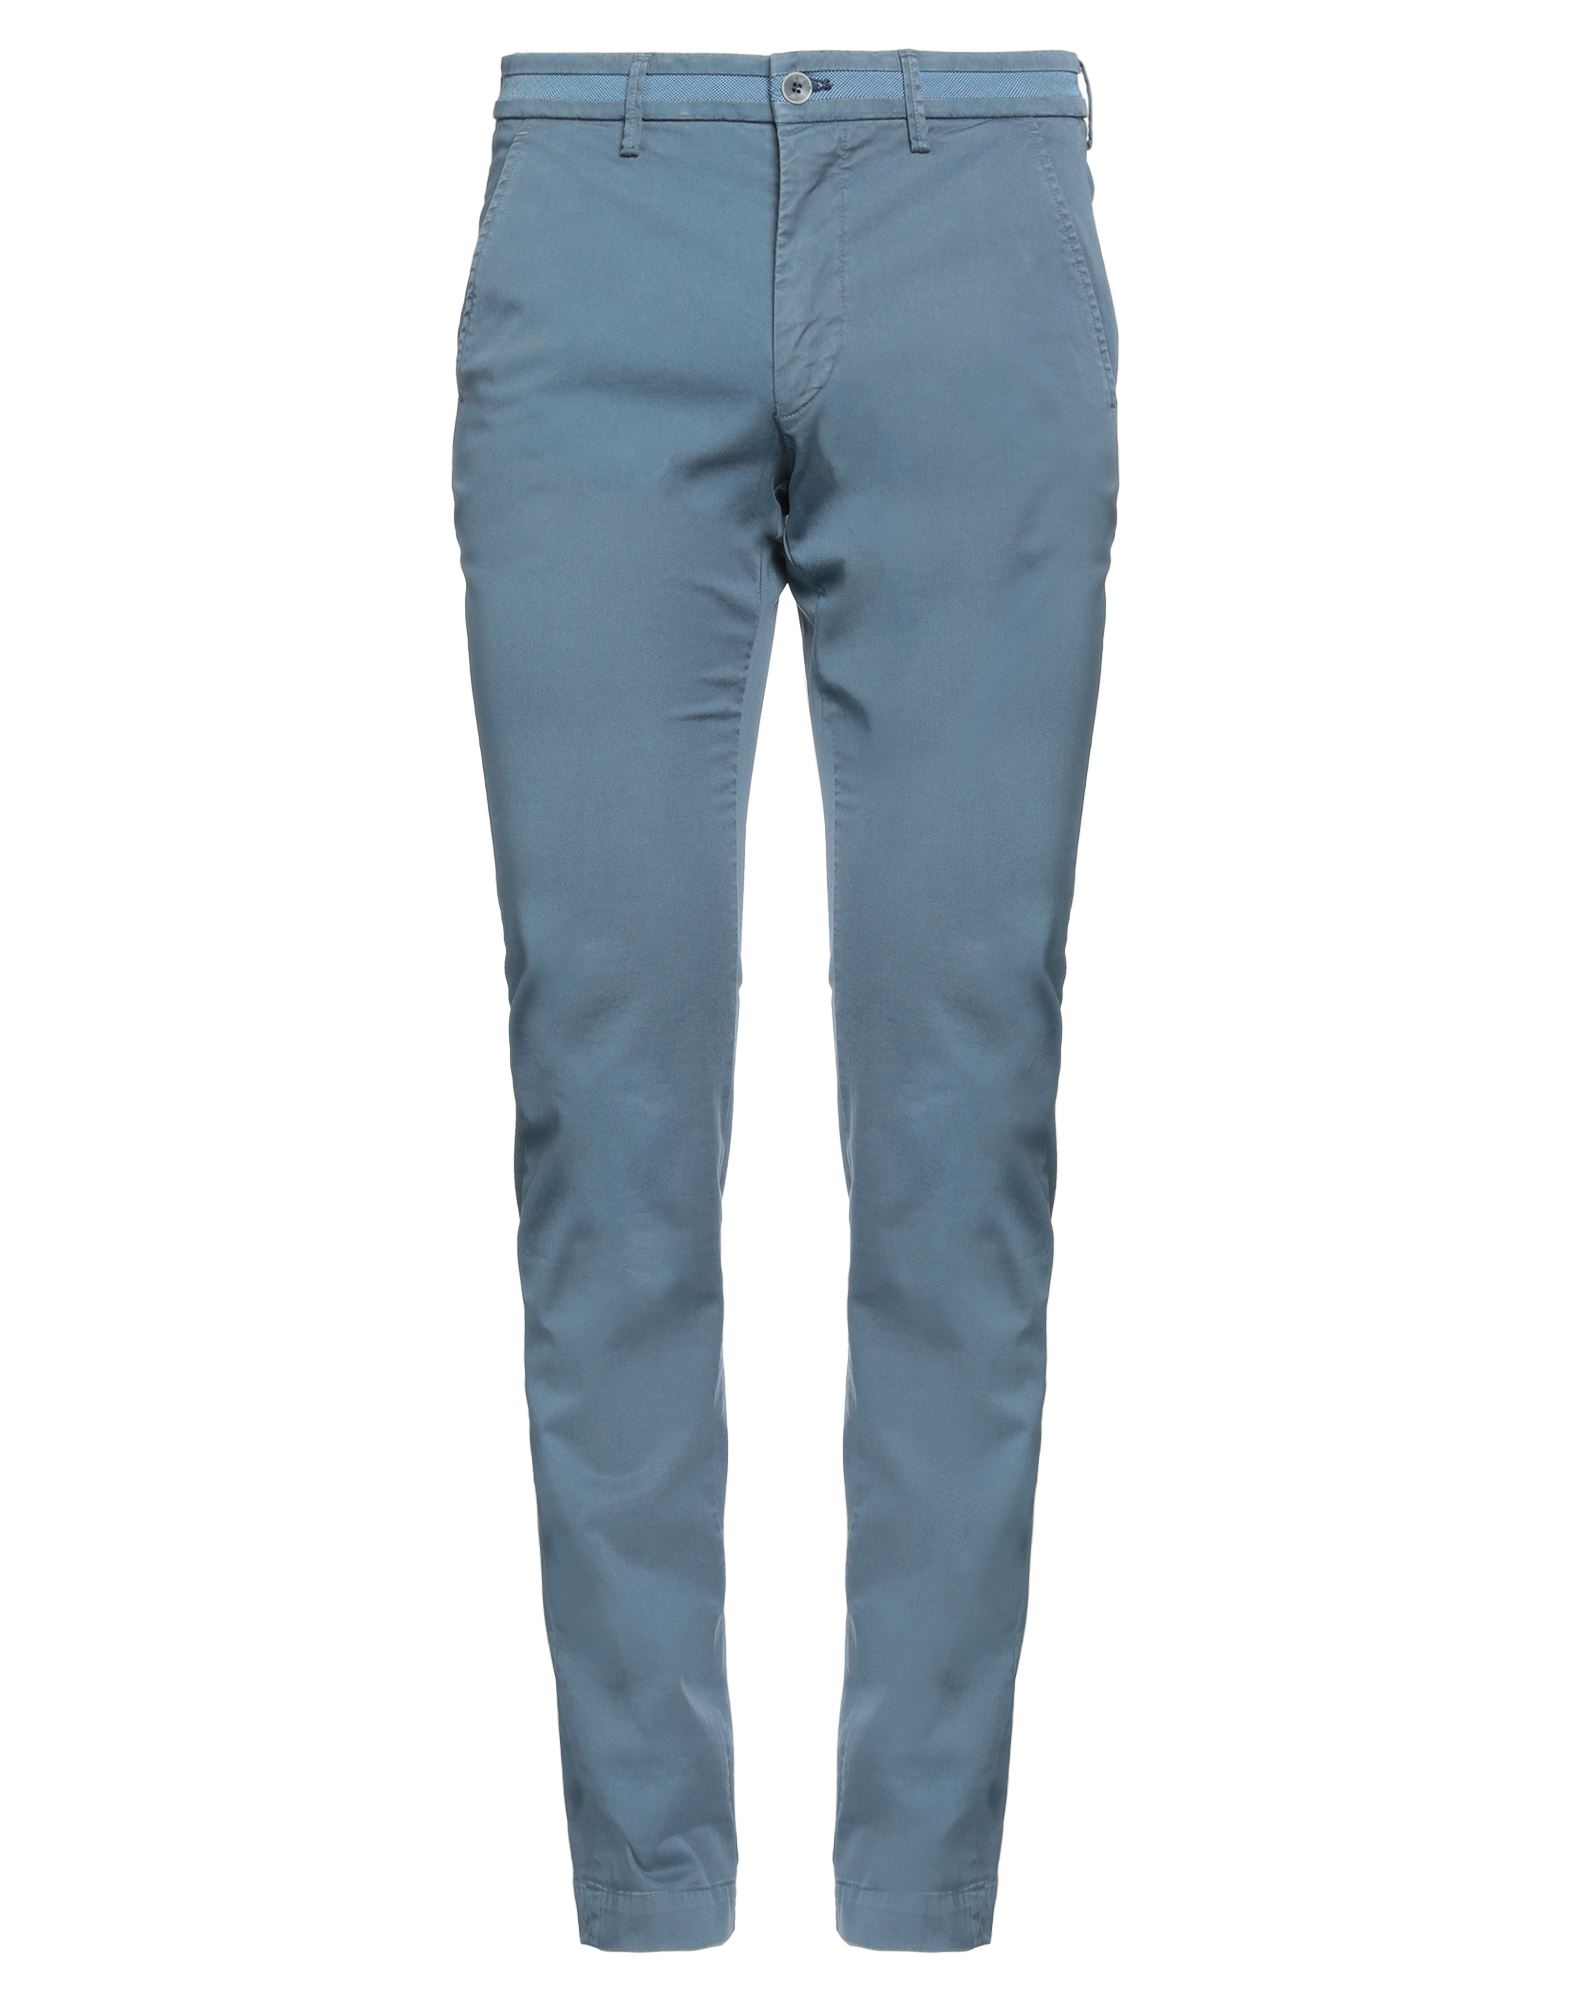 Mason's Man Pants Navy Blue Size 40 Linen, Cotton, Elastane